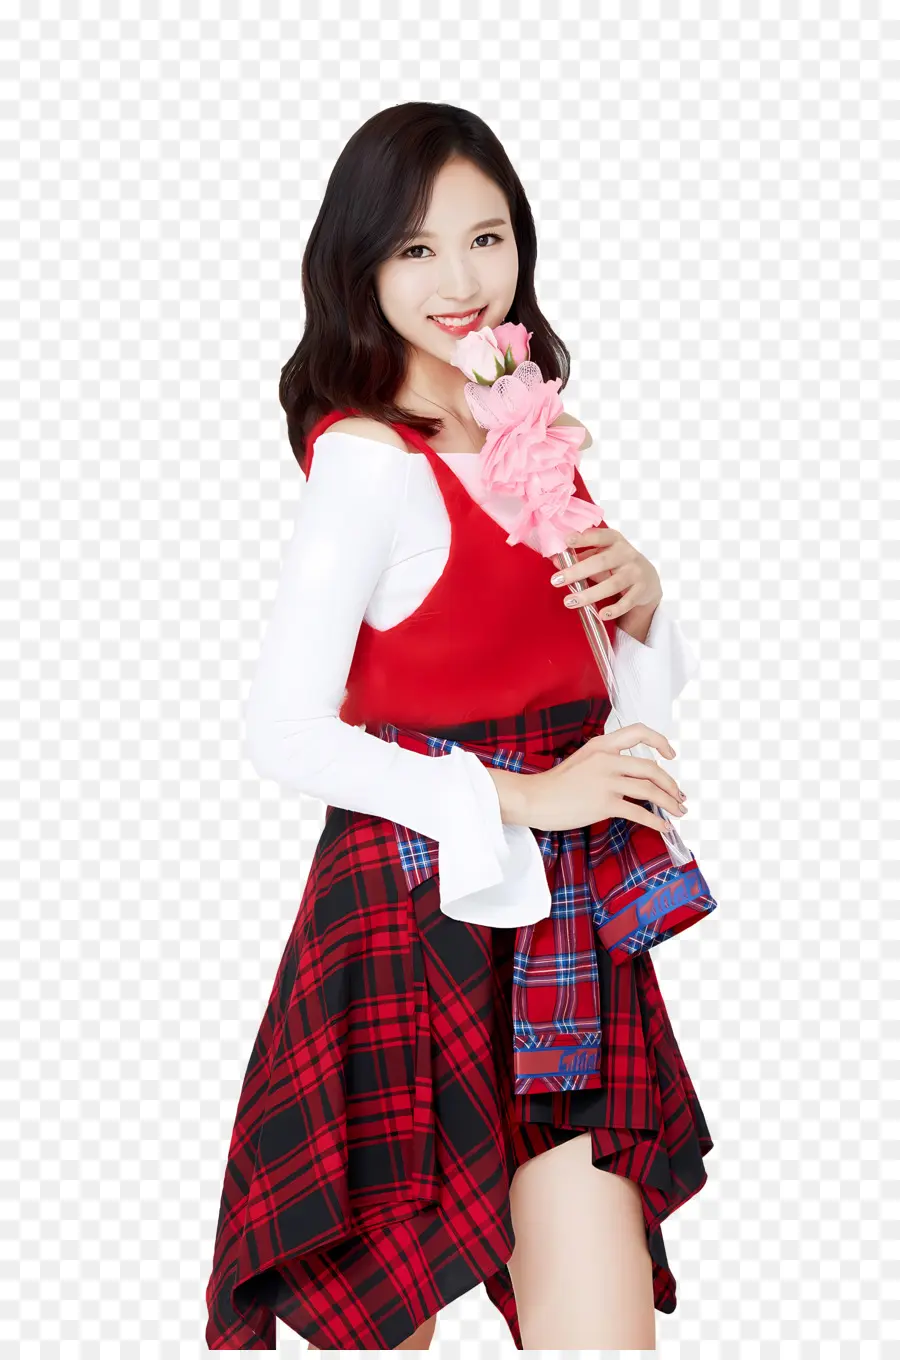 twice south korean girls young woman plaid dress flower